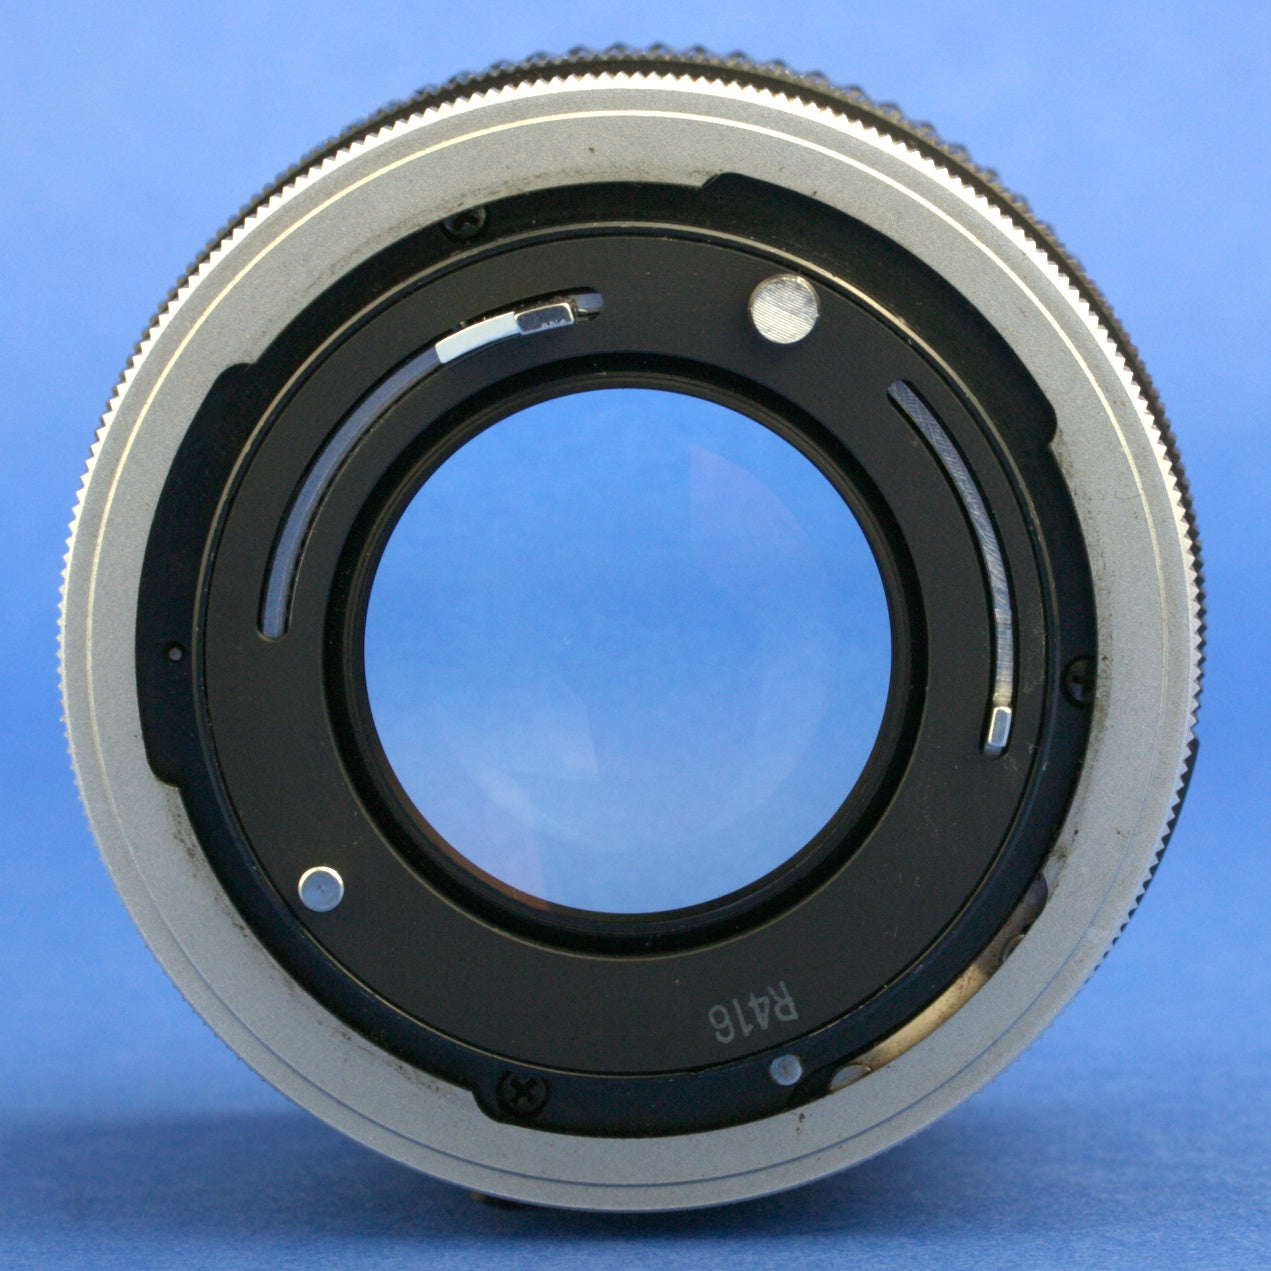 Canon FD 50mm 1.4 S.S.C. Lens